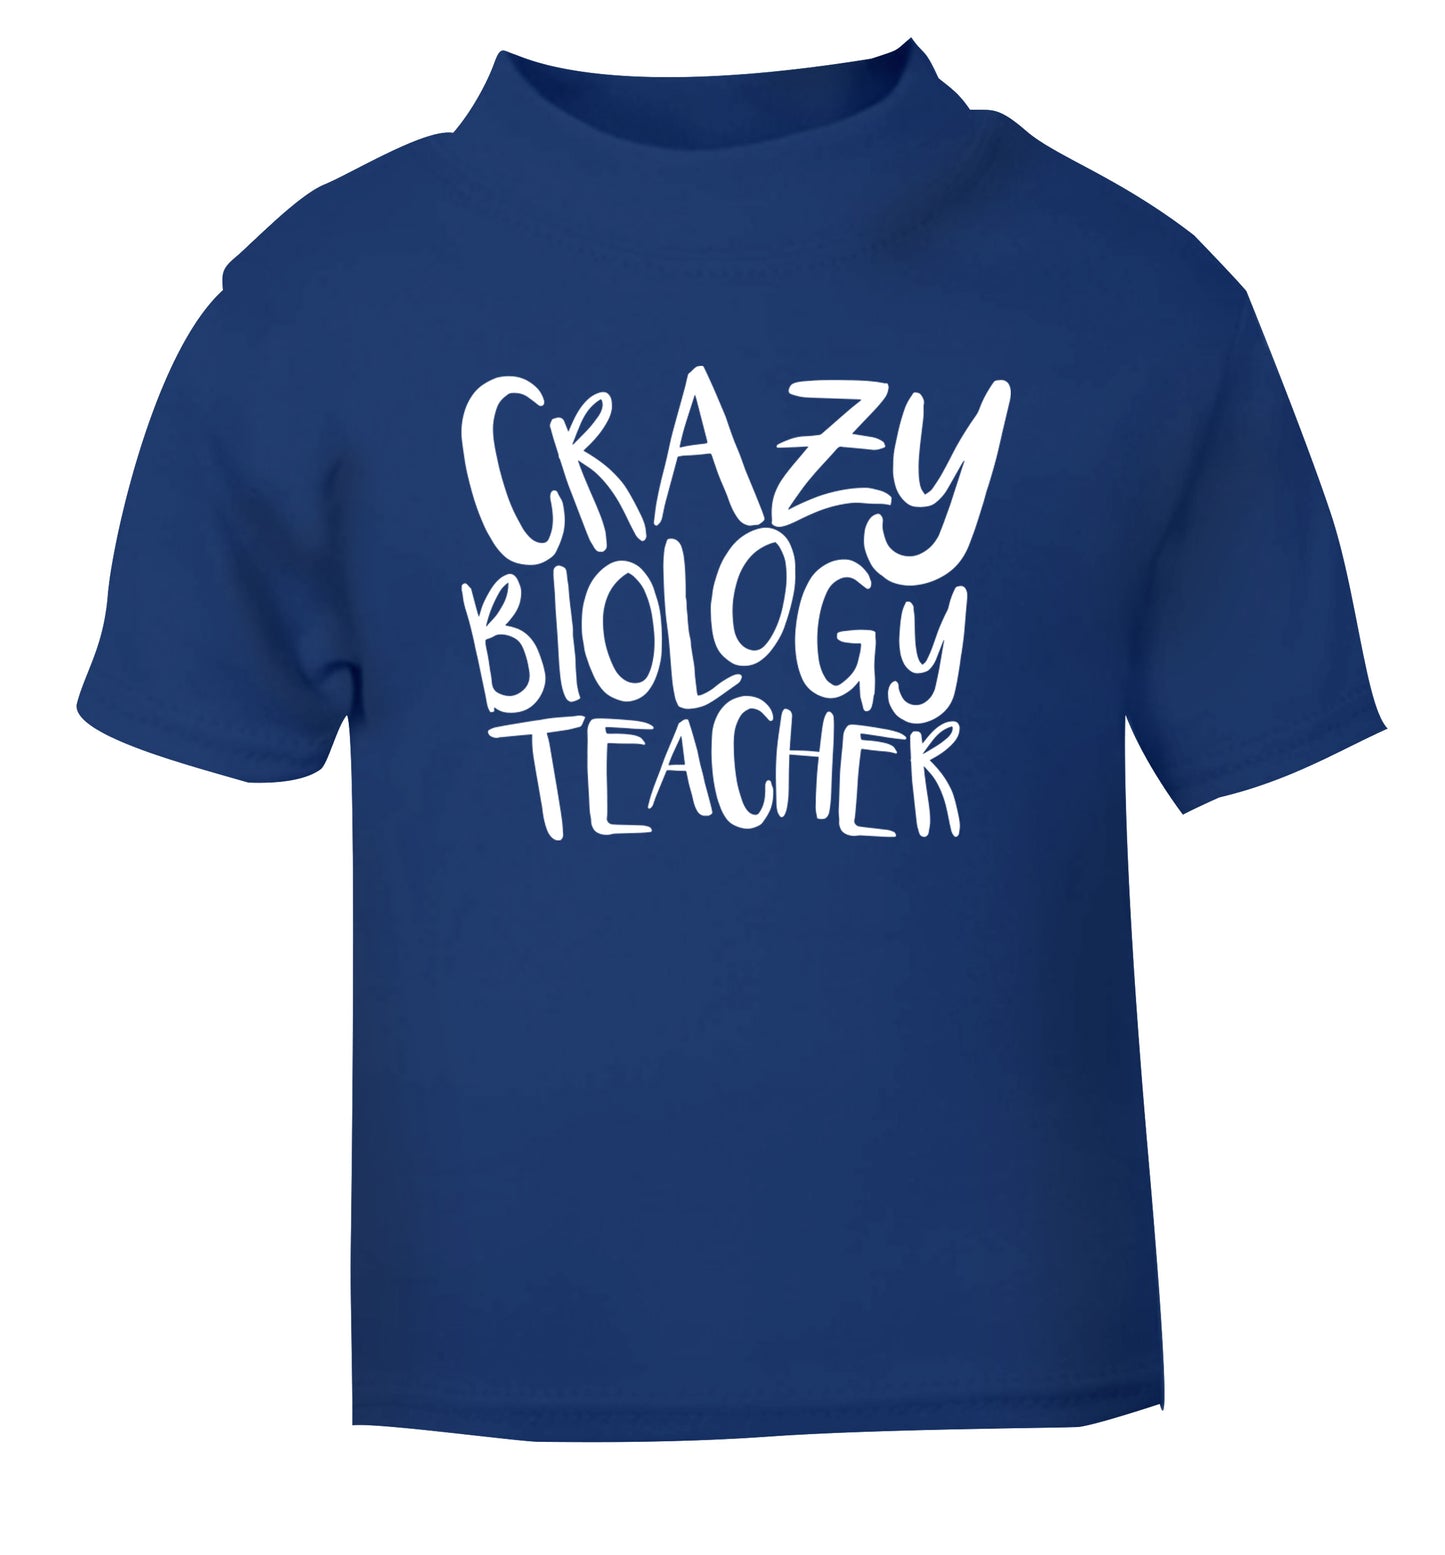 Crazy biology teacher blue Baby Toddler Tshirt 2 Years